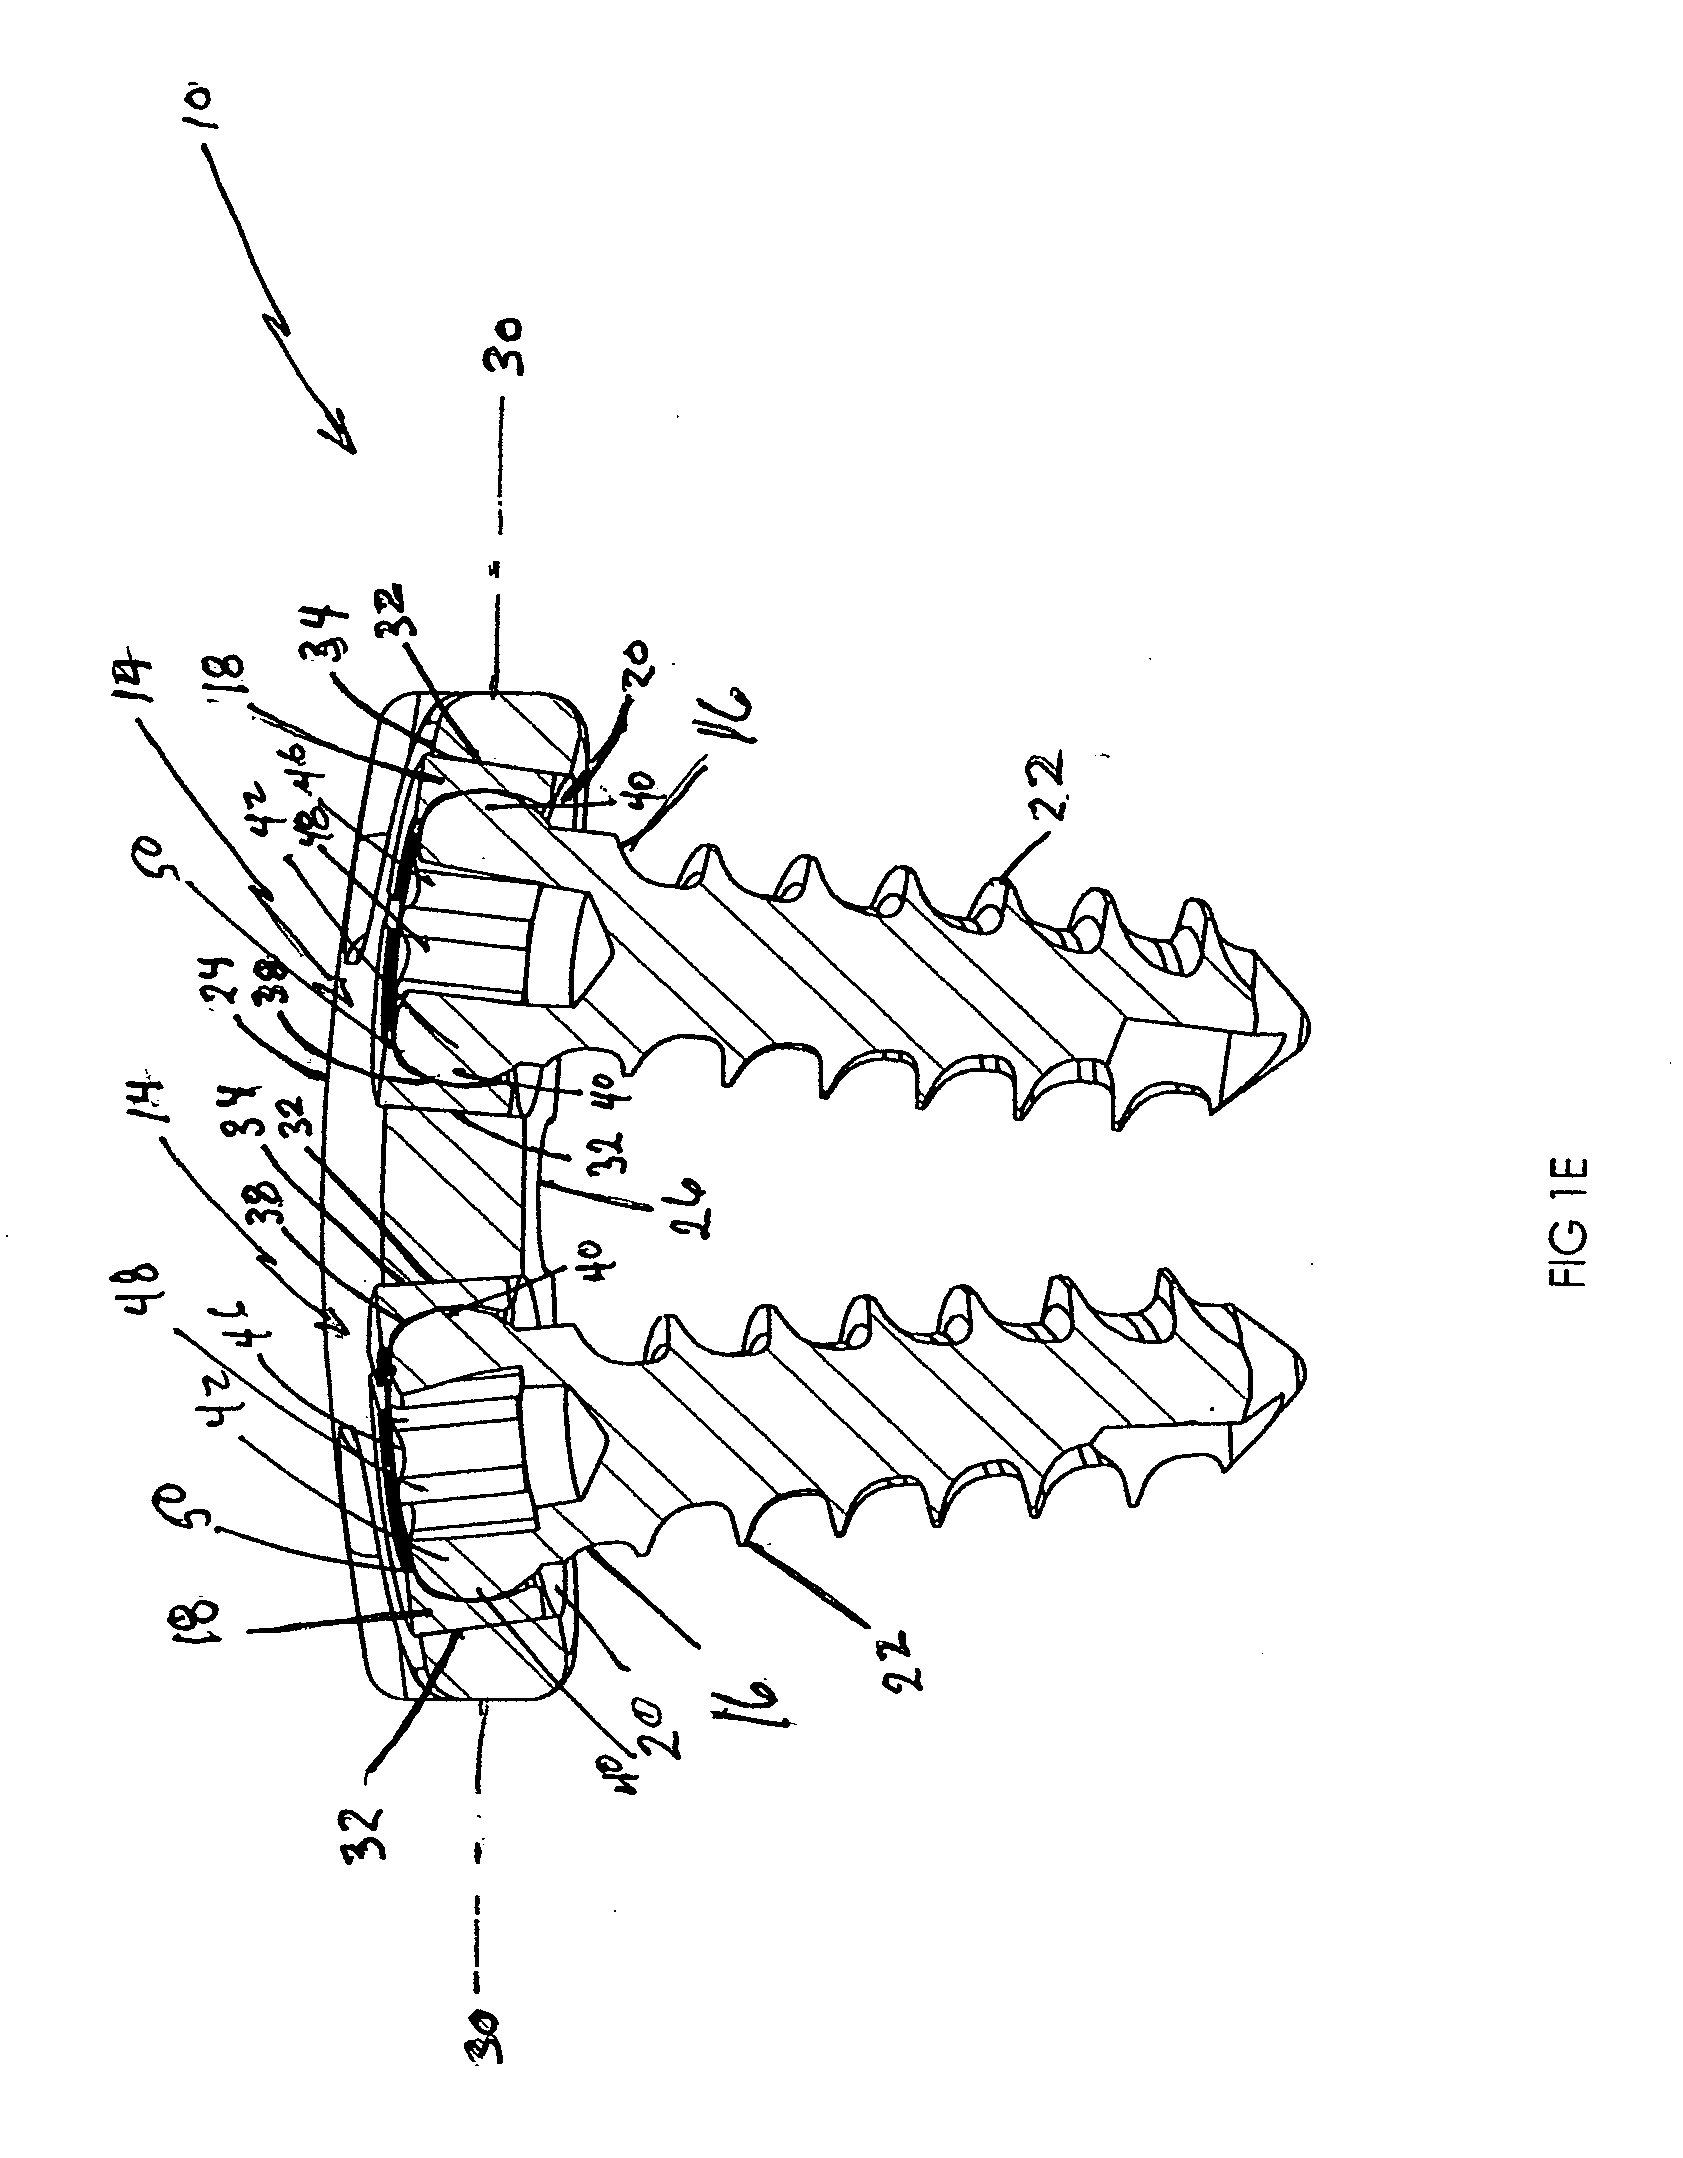 Anterior vertebral plate with taper lock screw